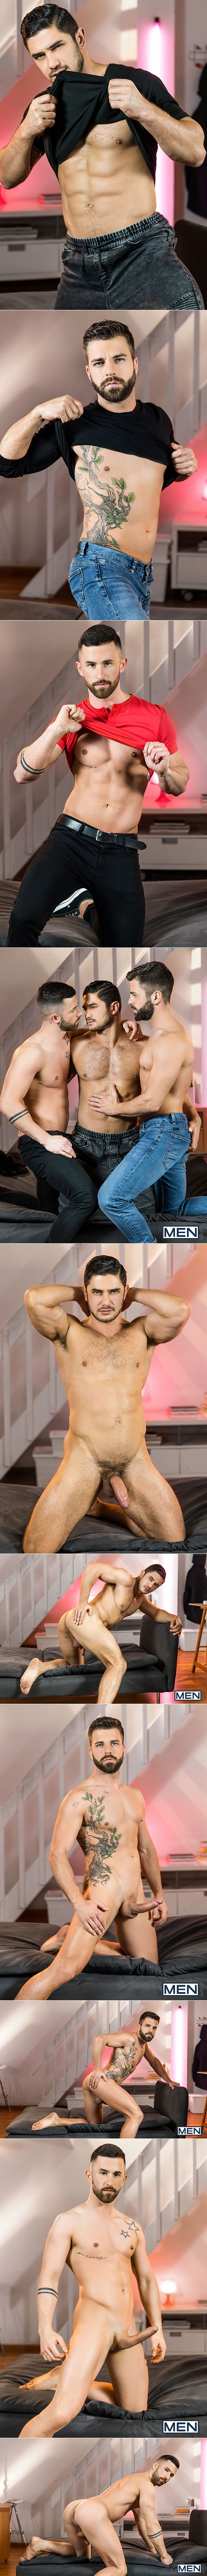 Men.com: Dato Foland, Hector De Silva and Sunny Colucci's threesome in "The Couple That Fucks Together, Part 2"